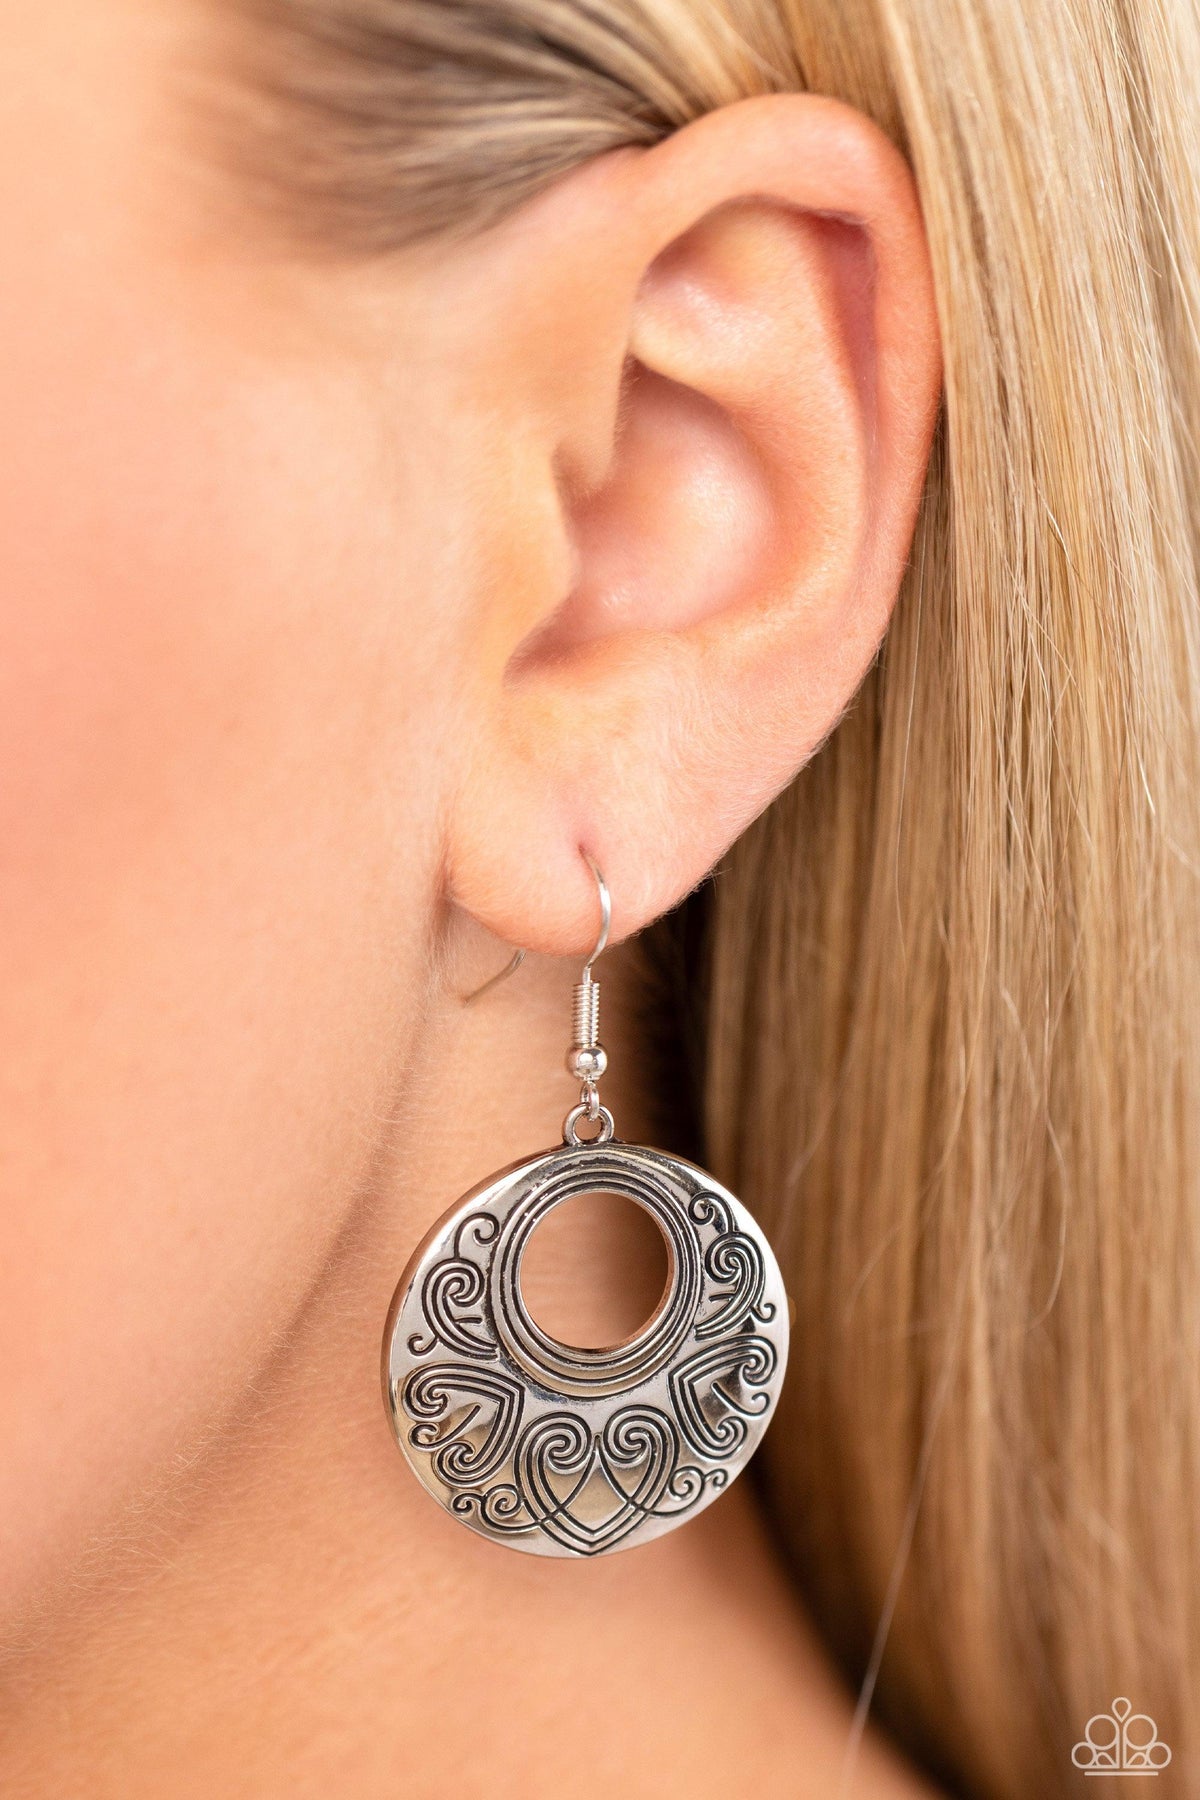 Western Beau Silver Heart Earrings - Paparazzi Accessories-on model - CarasShop.com - $5 Jewelry by Cara Jewels